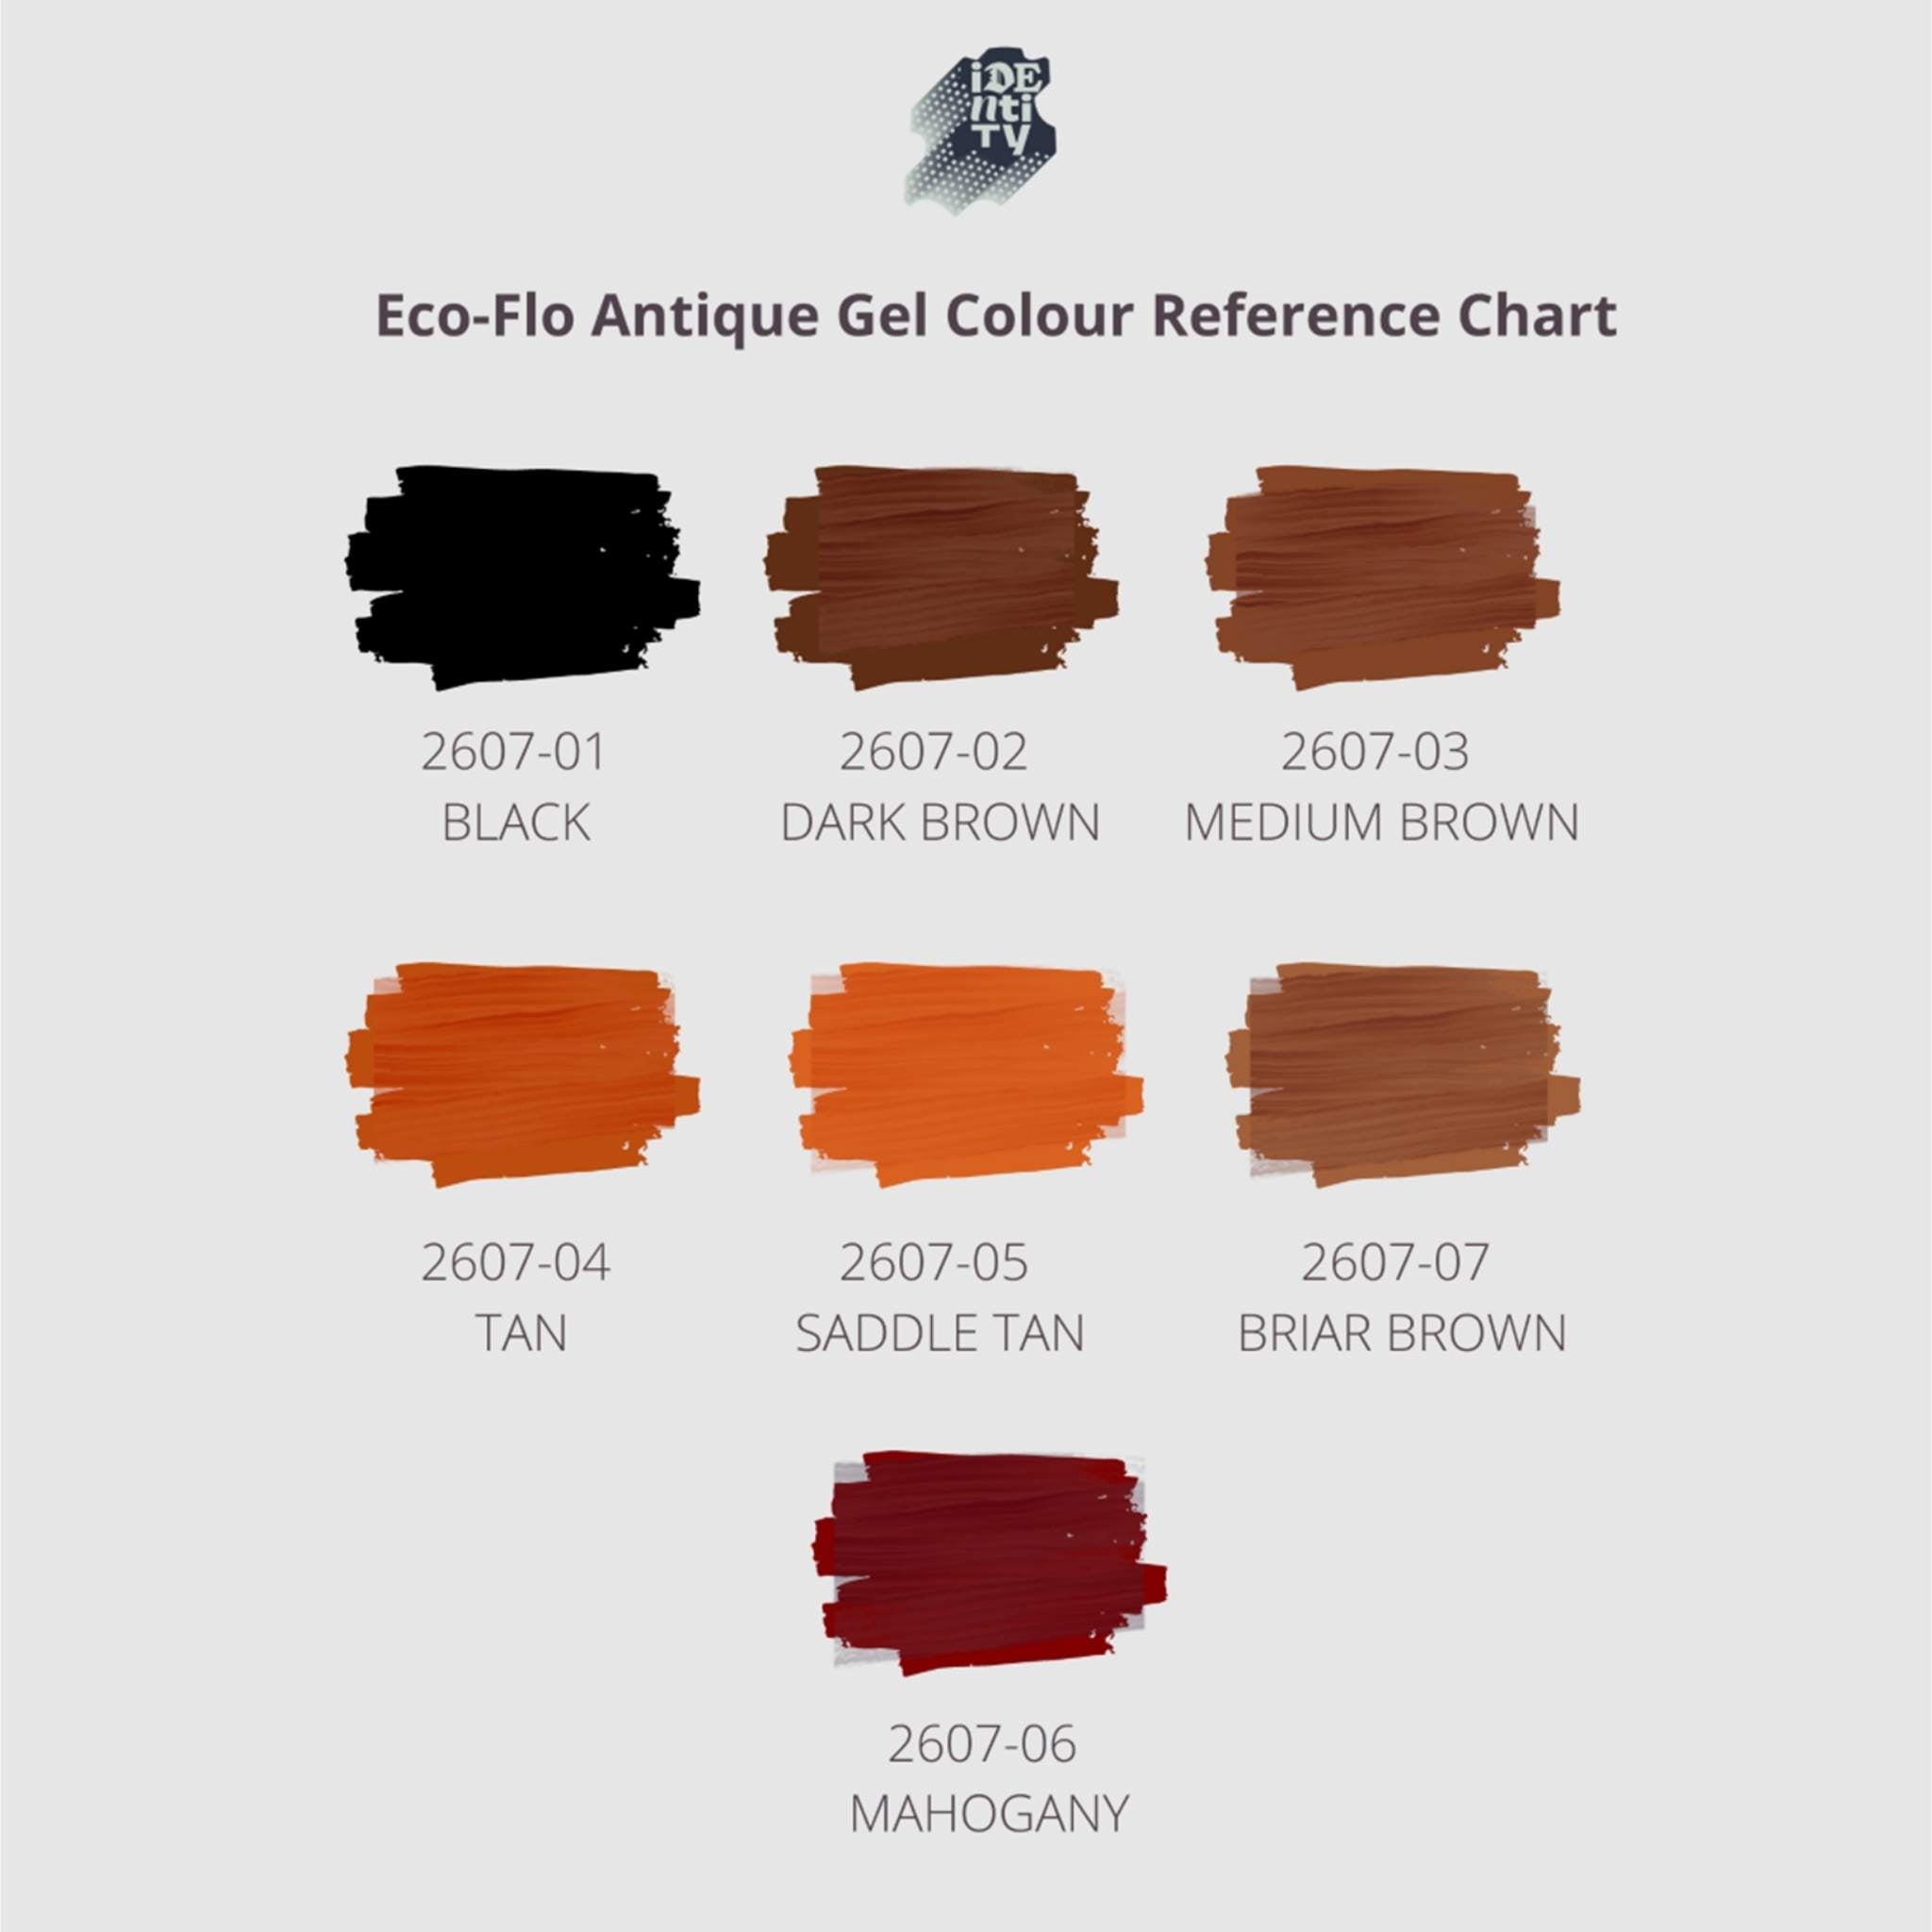 Eco-Flo Antique Gels Colour Reference Chart